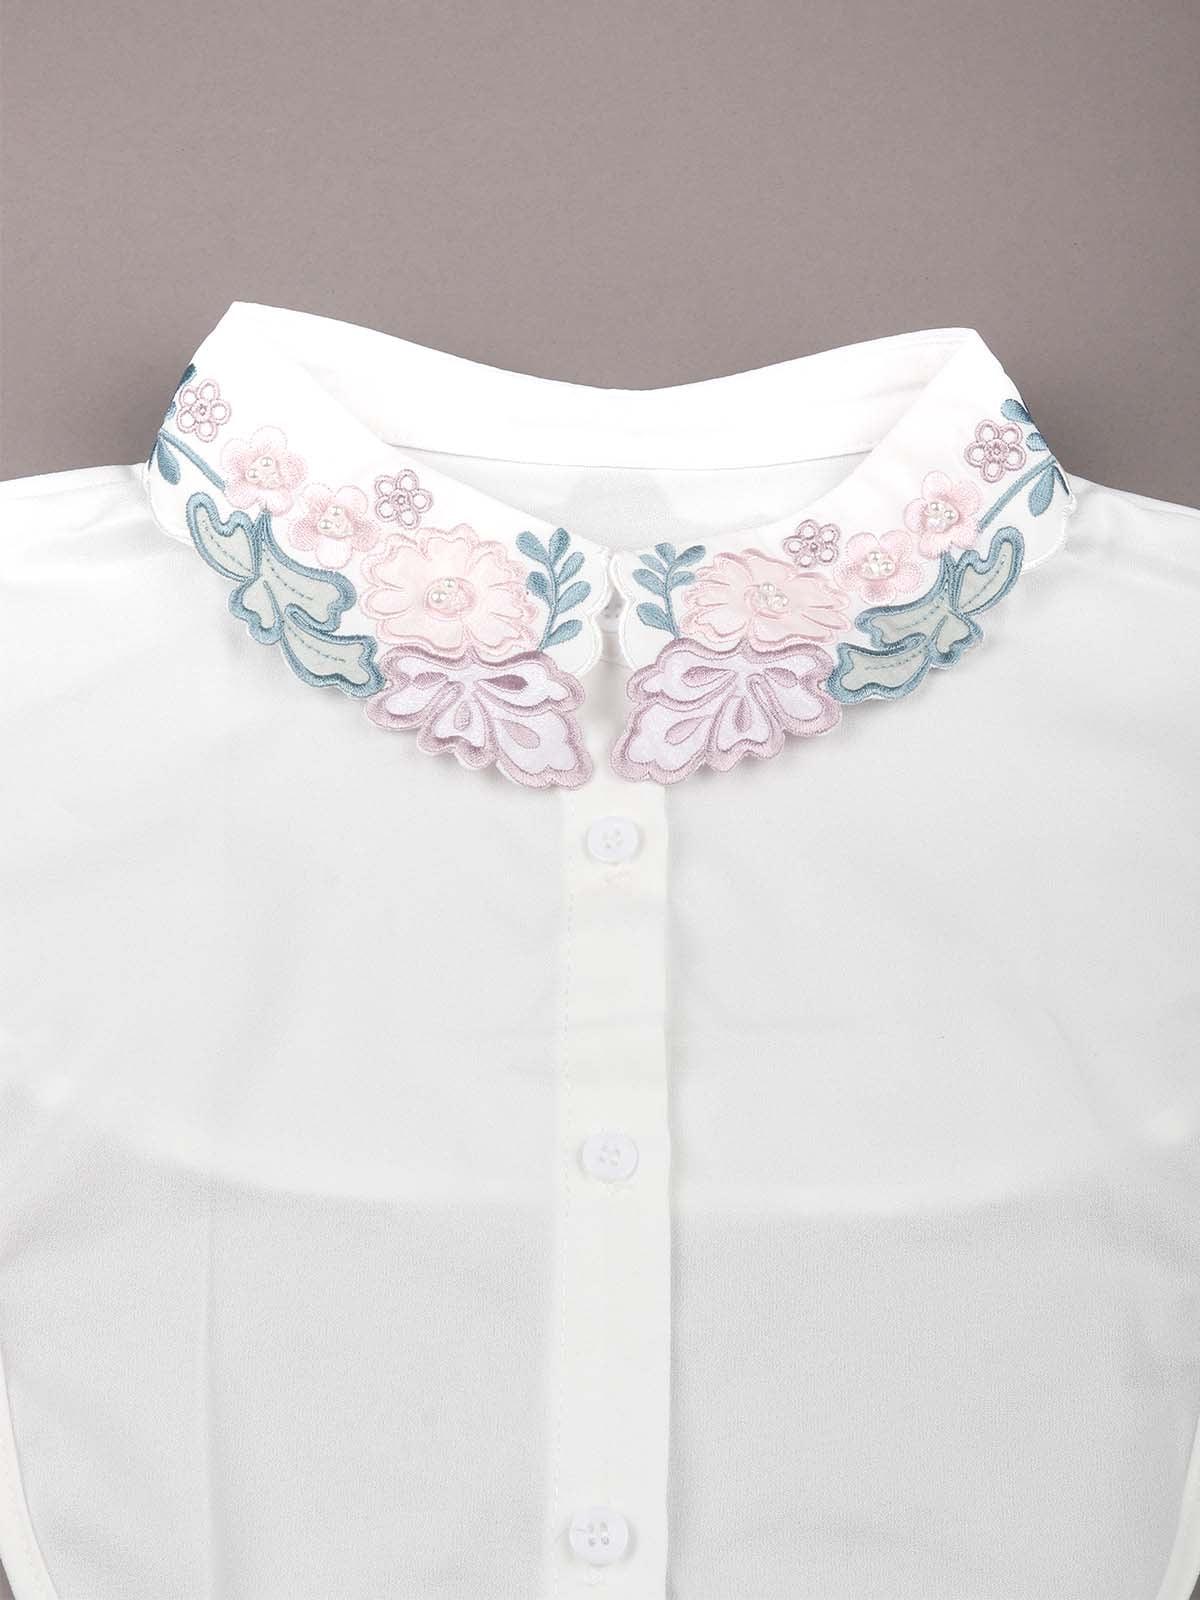 Gorgeous white detachable collar - Odette